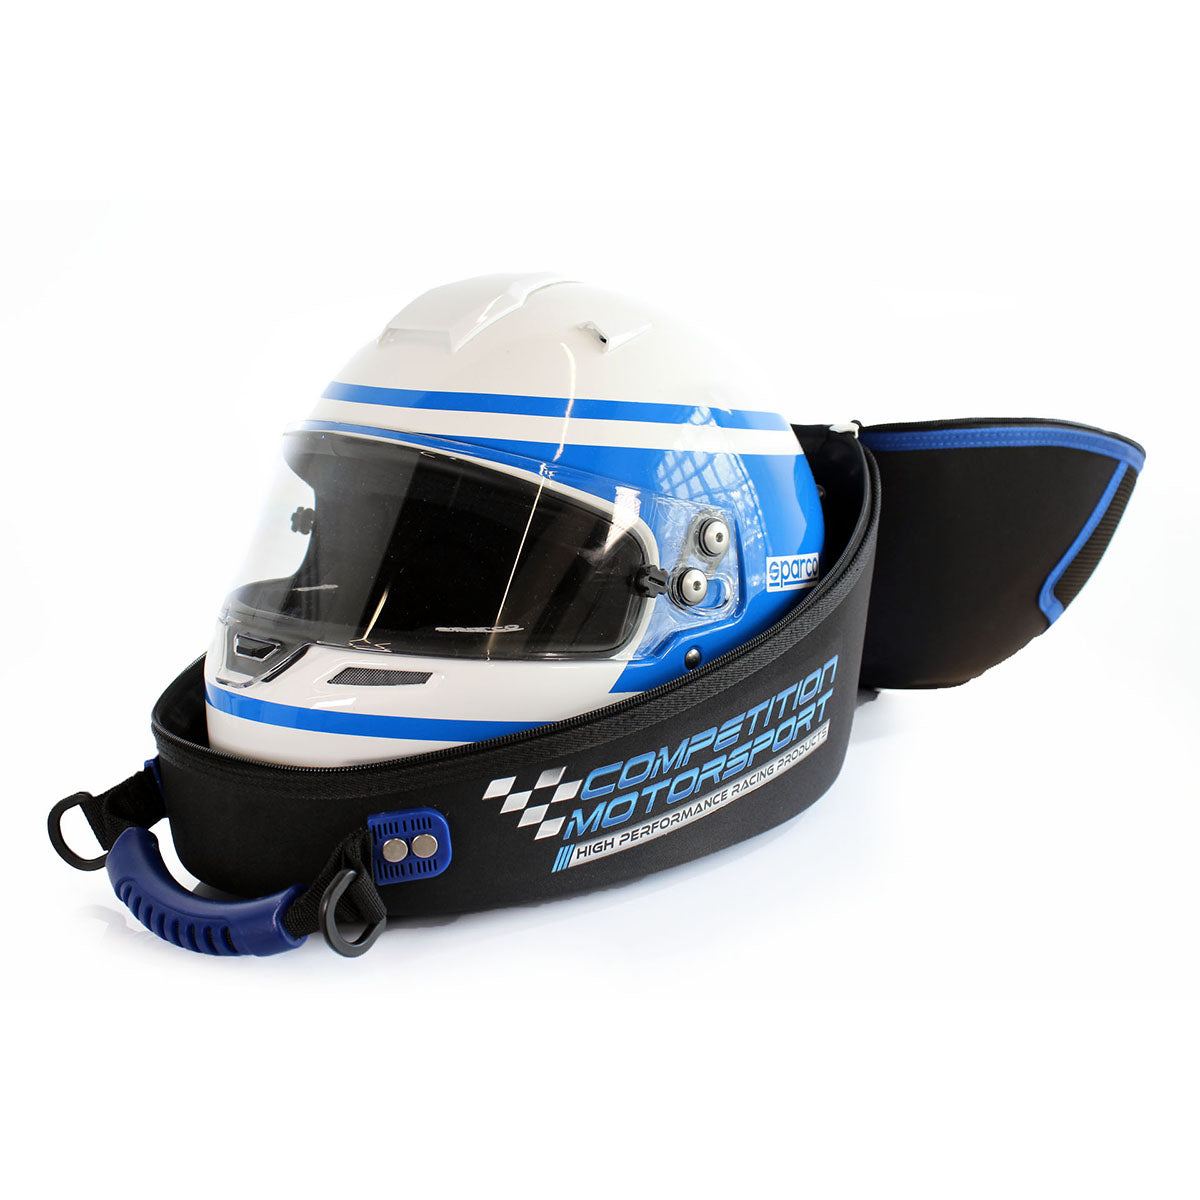 "CMS Performance Racing Helmet Bag - Essential Gear for Racers"